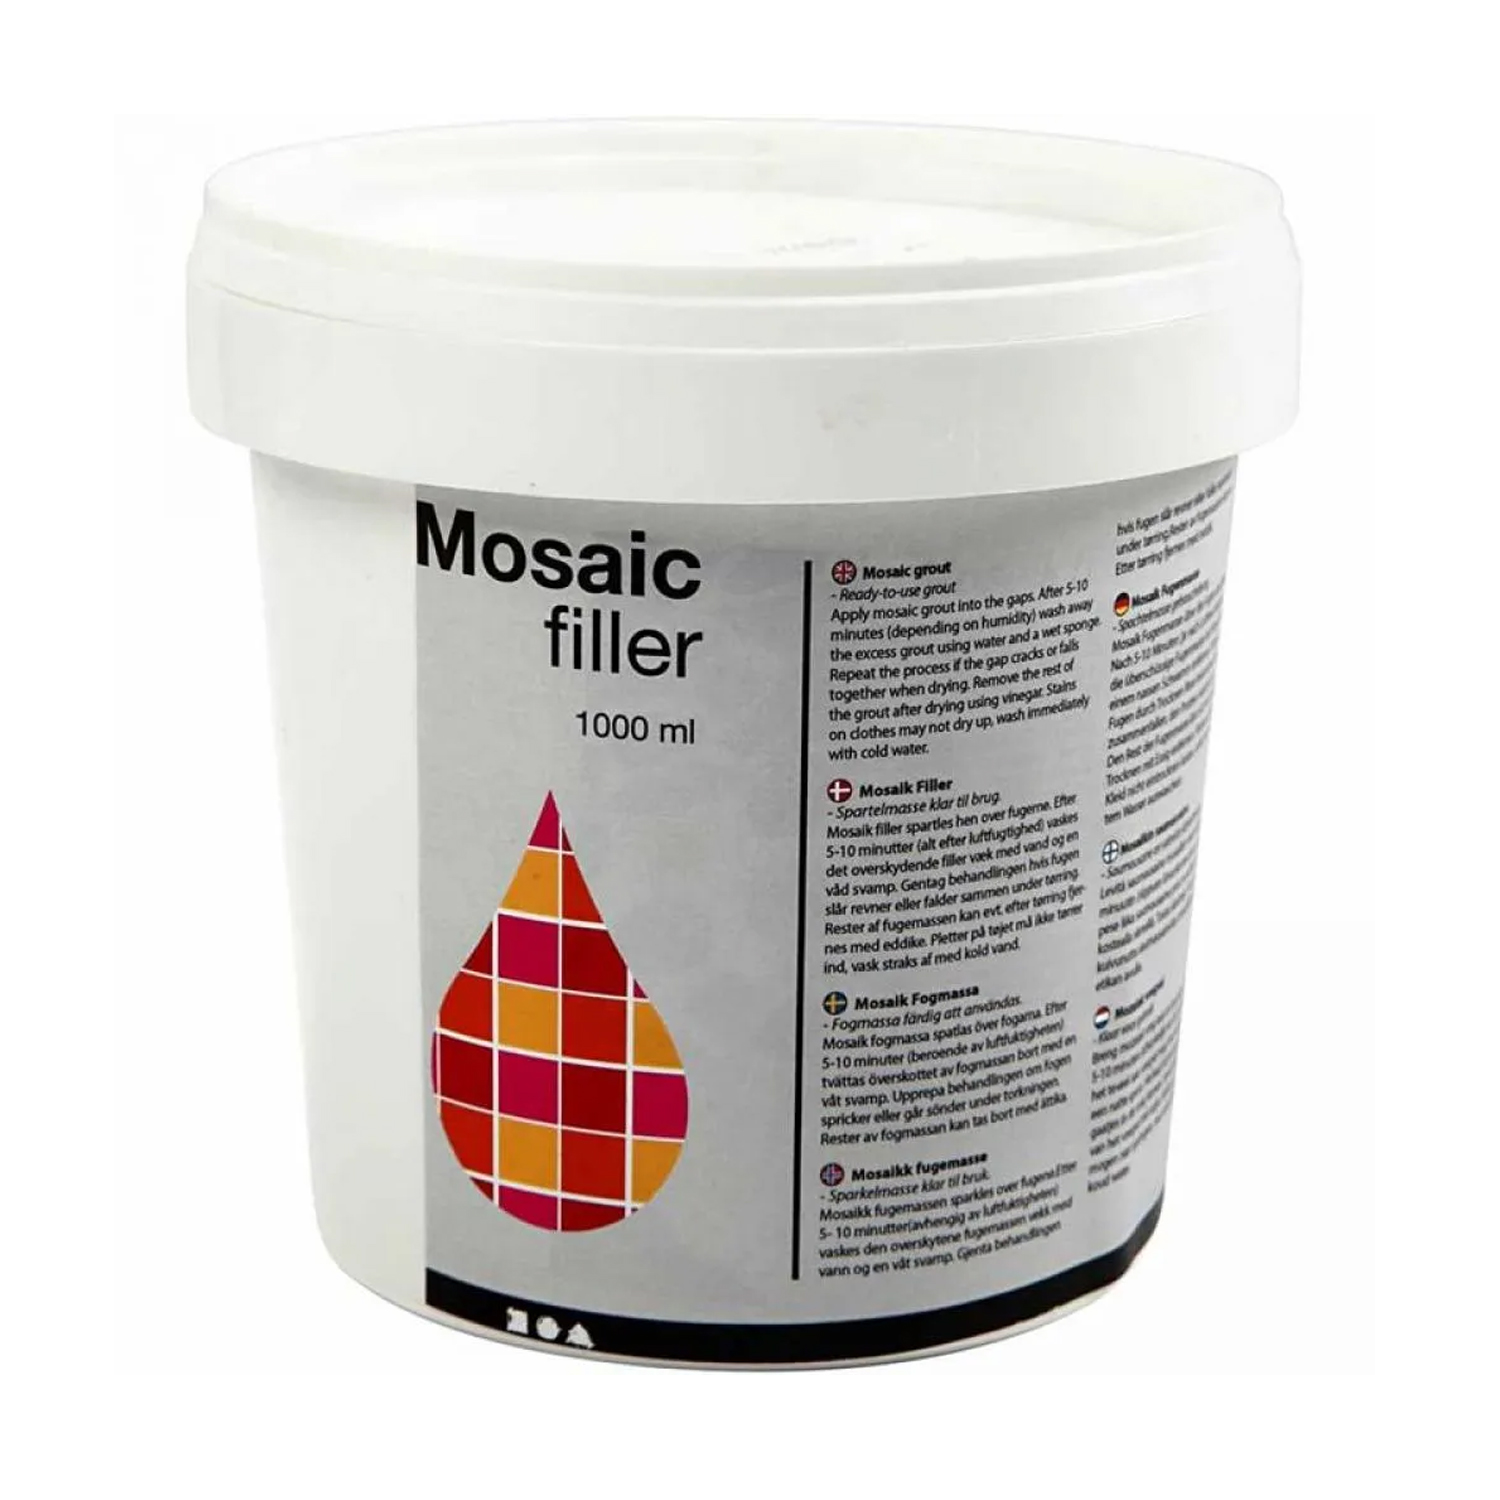 NEU Gebrauchsfertige Mosaik Fugenmasse / Fugenfüller, 1000 ml, Weiß